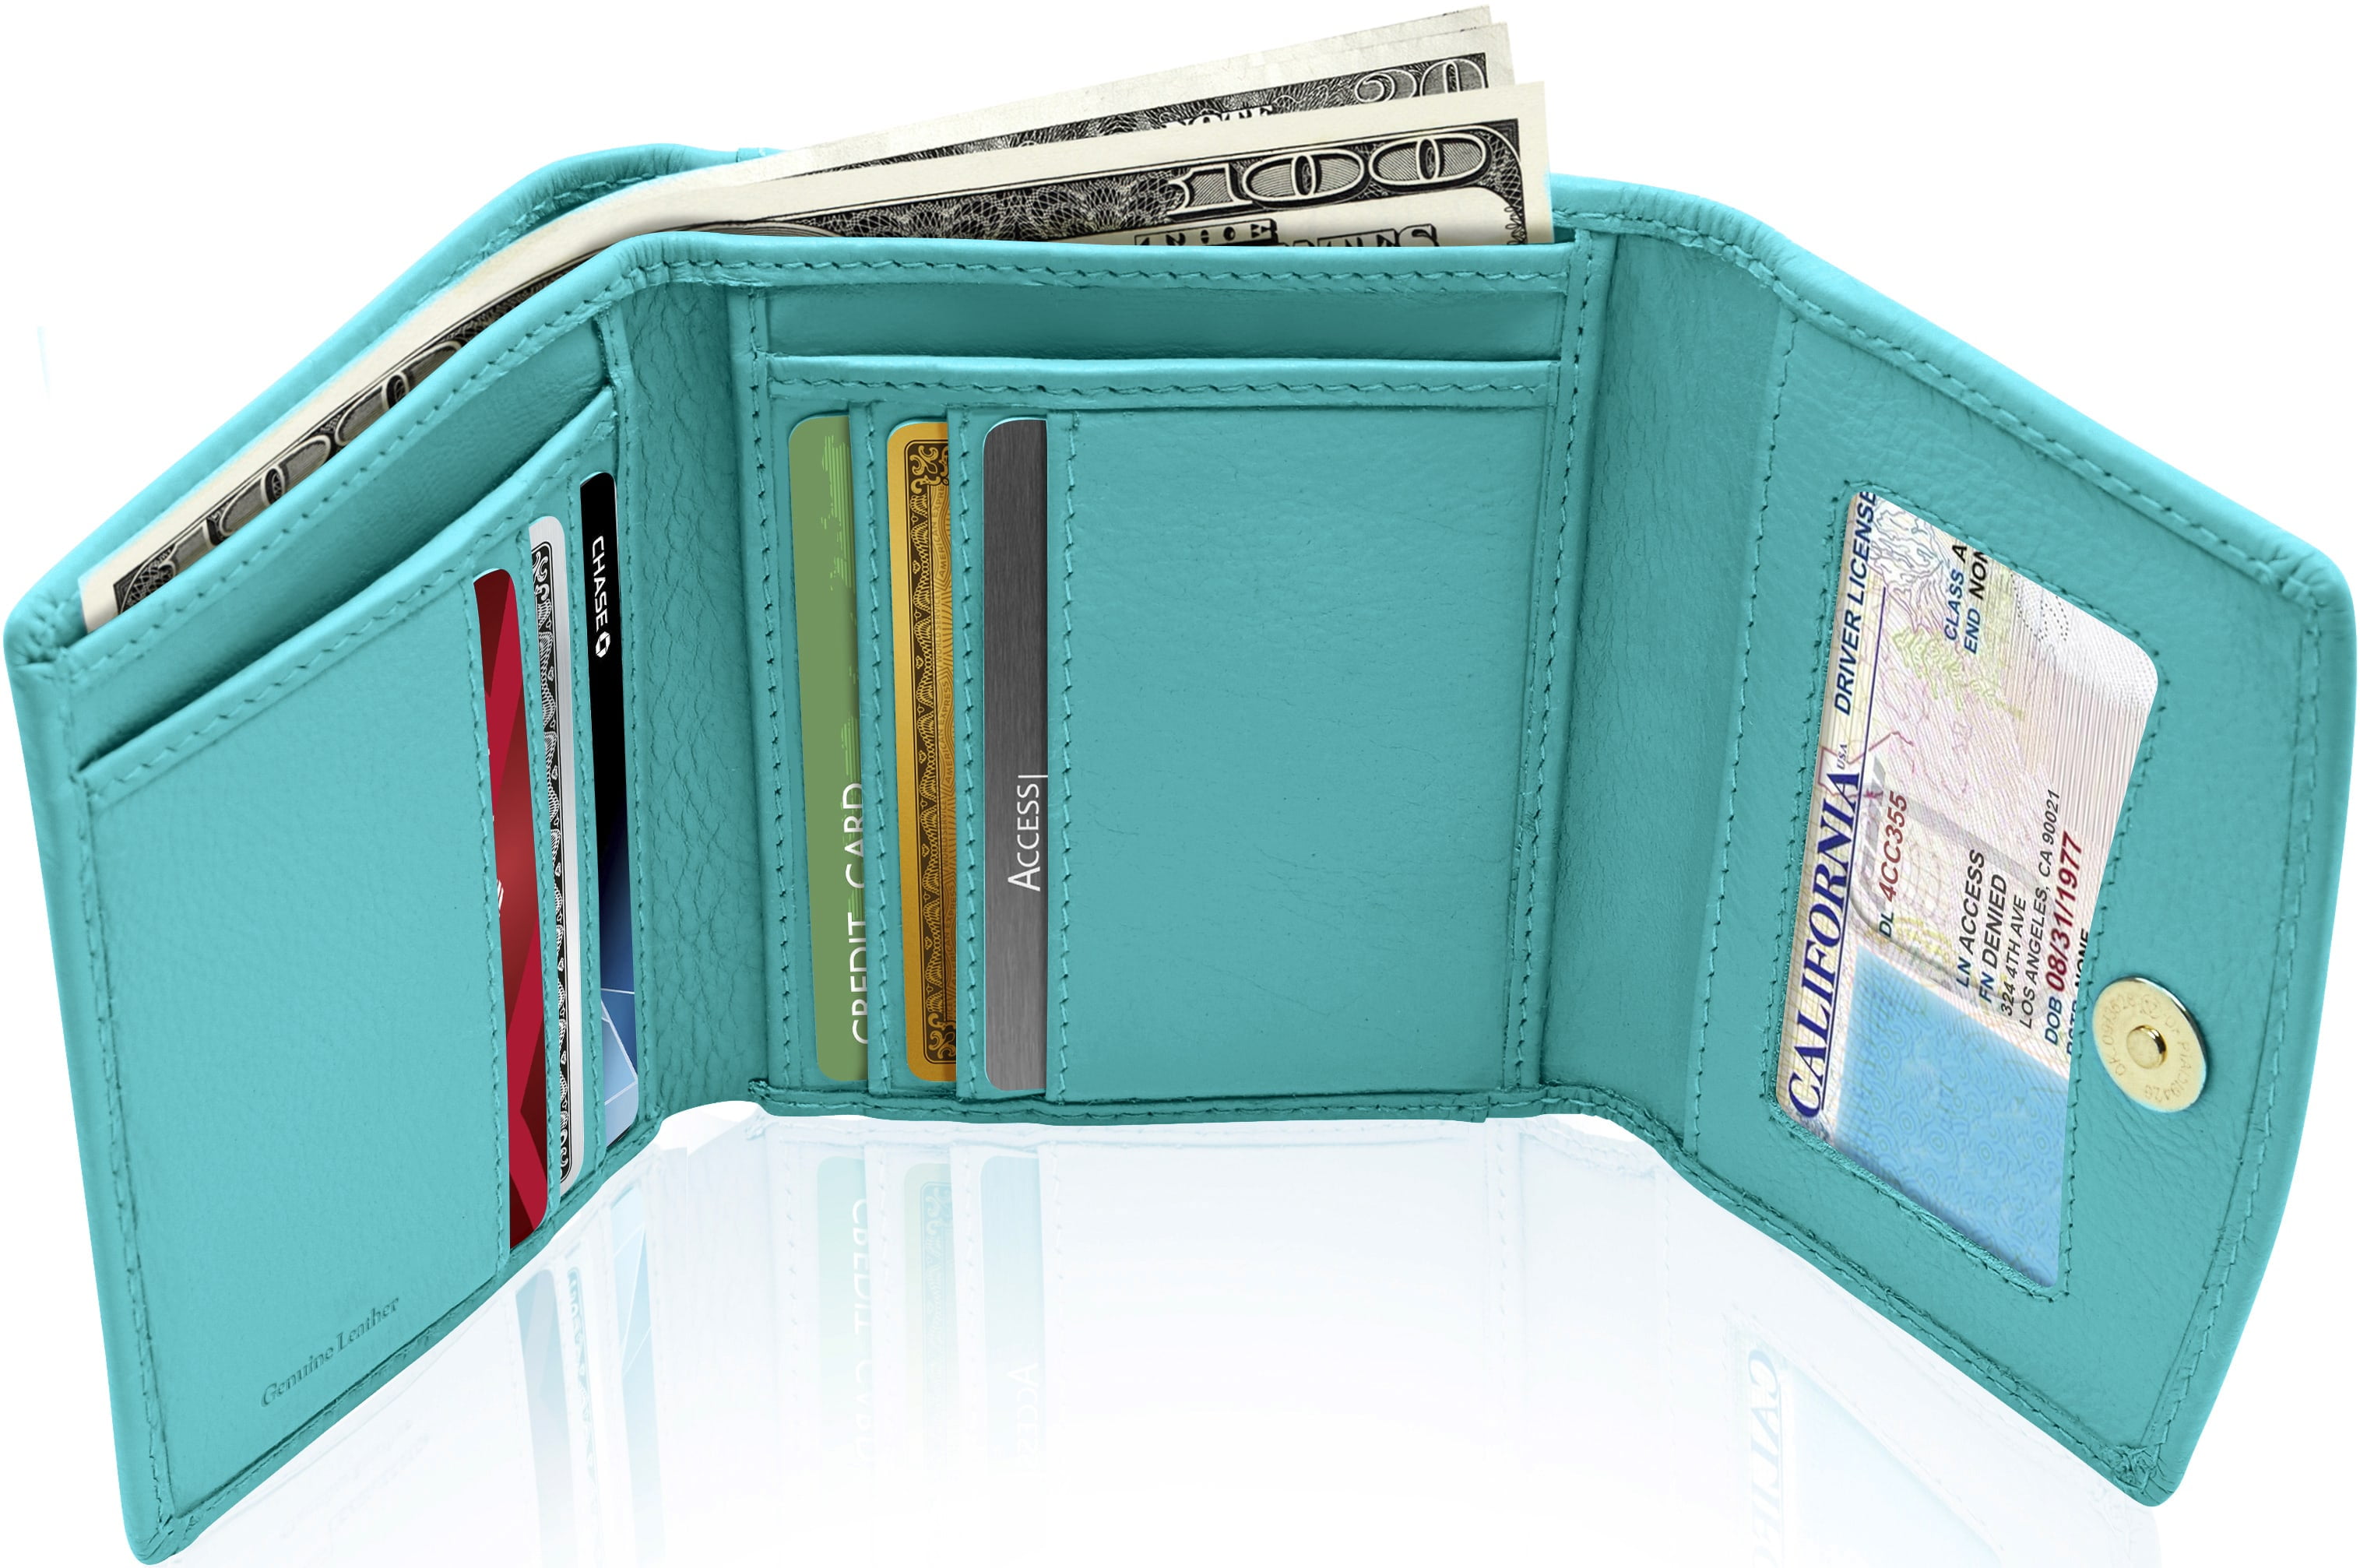 Slim Wallet For Men Women Ultra Thin Mini Small Female Coin Purse ID Card Holder